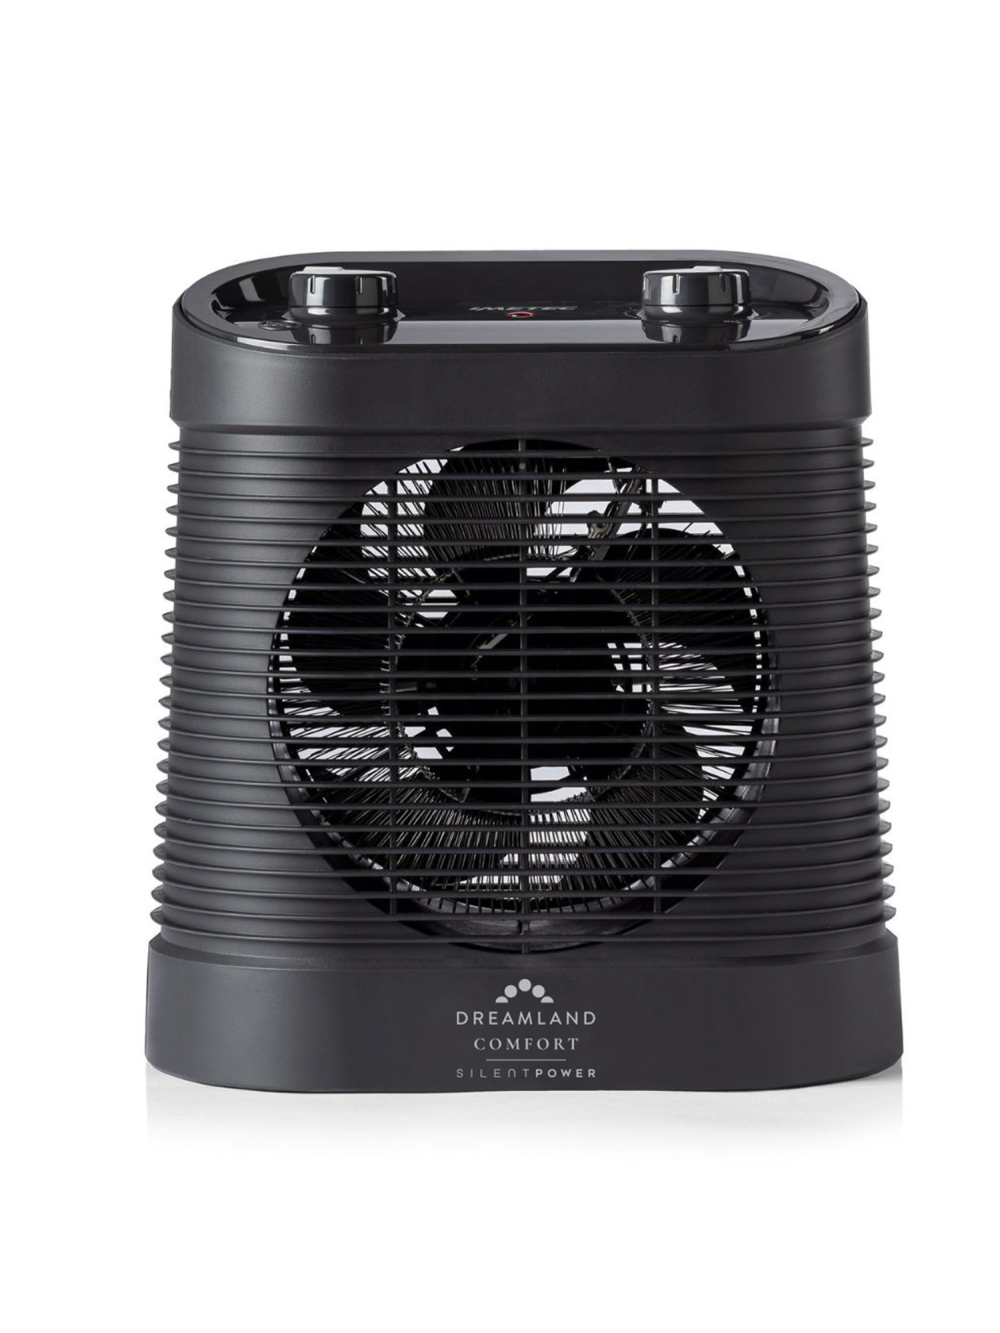 Dreamland Silent Power Comfort Fan Heater featured image